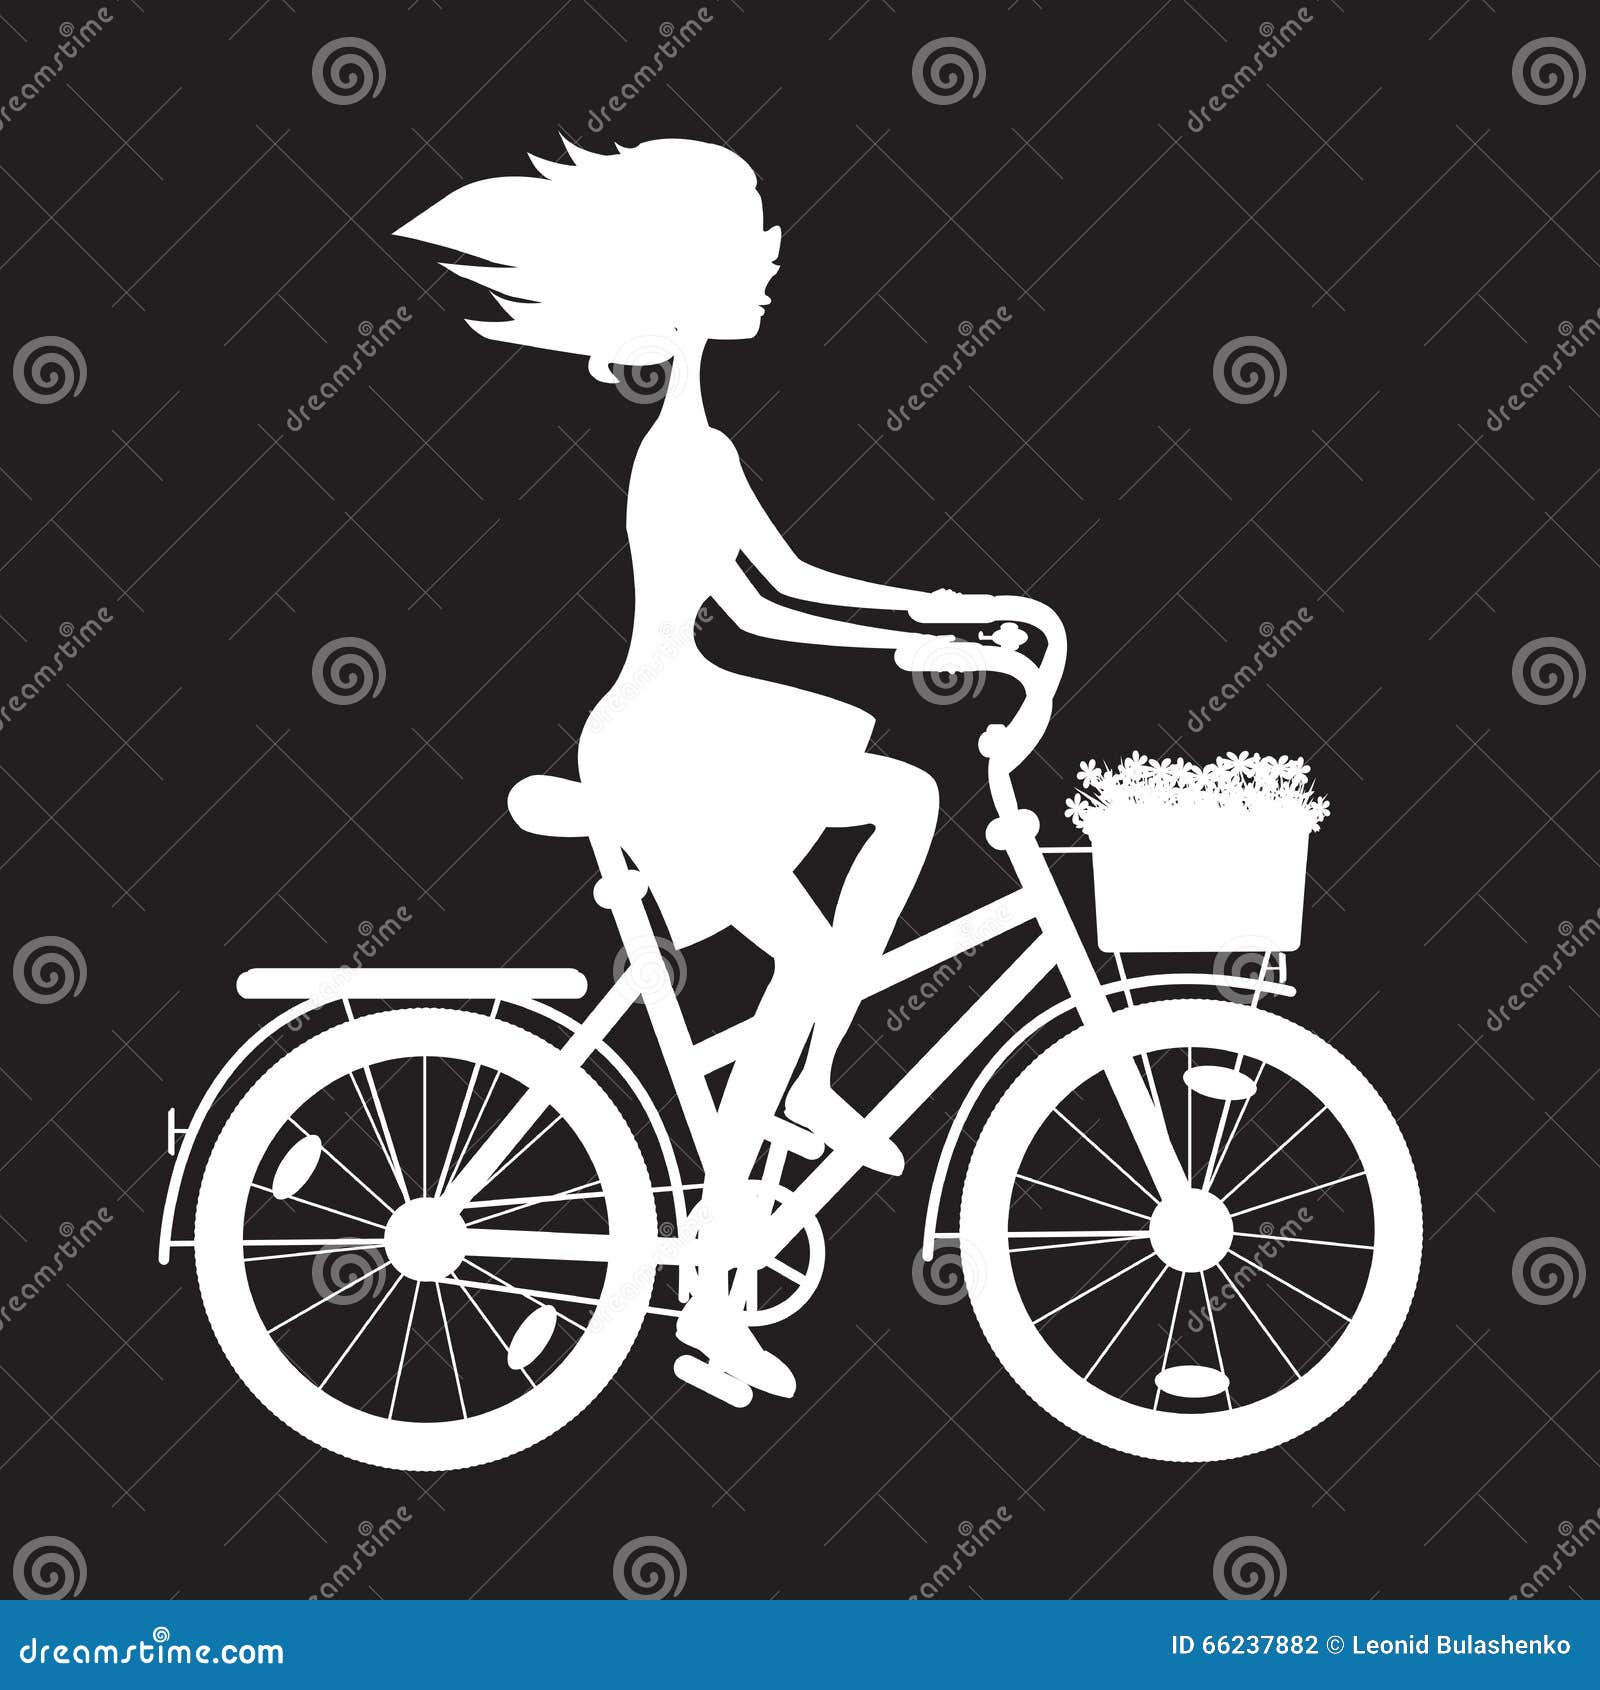 stencil girl on bike